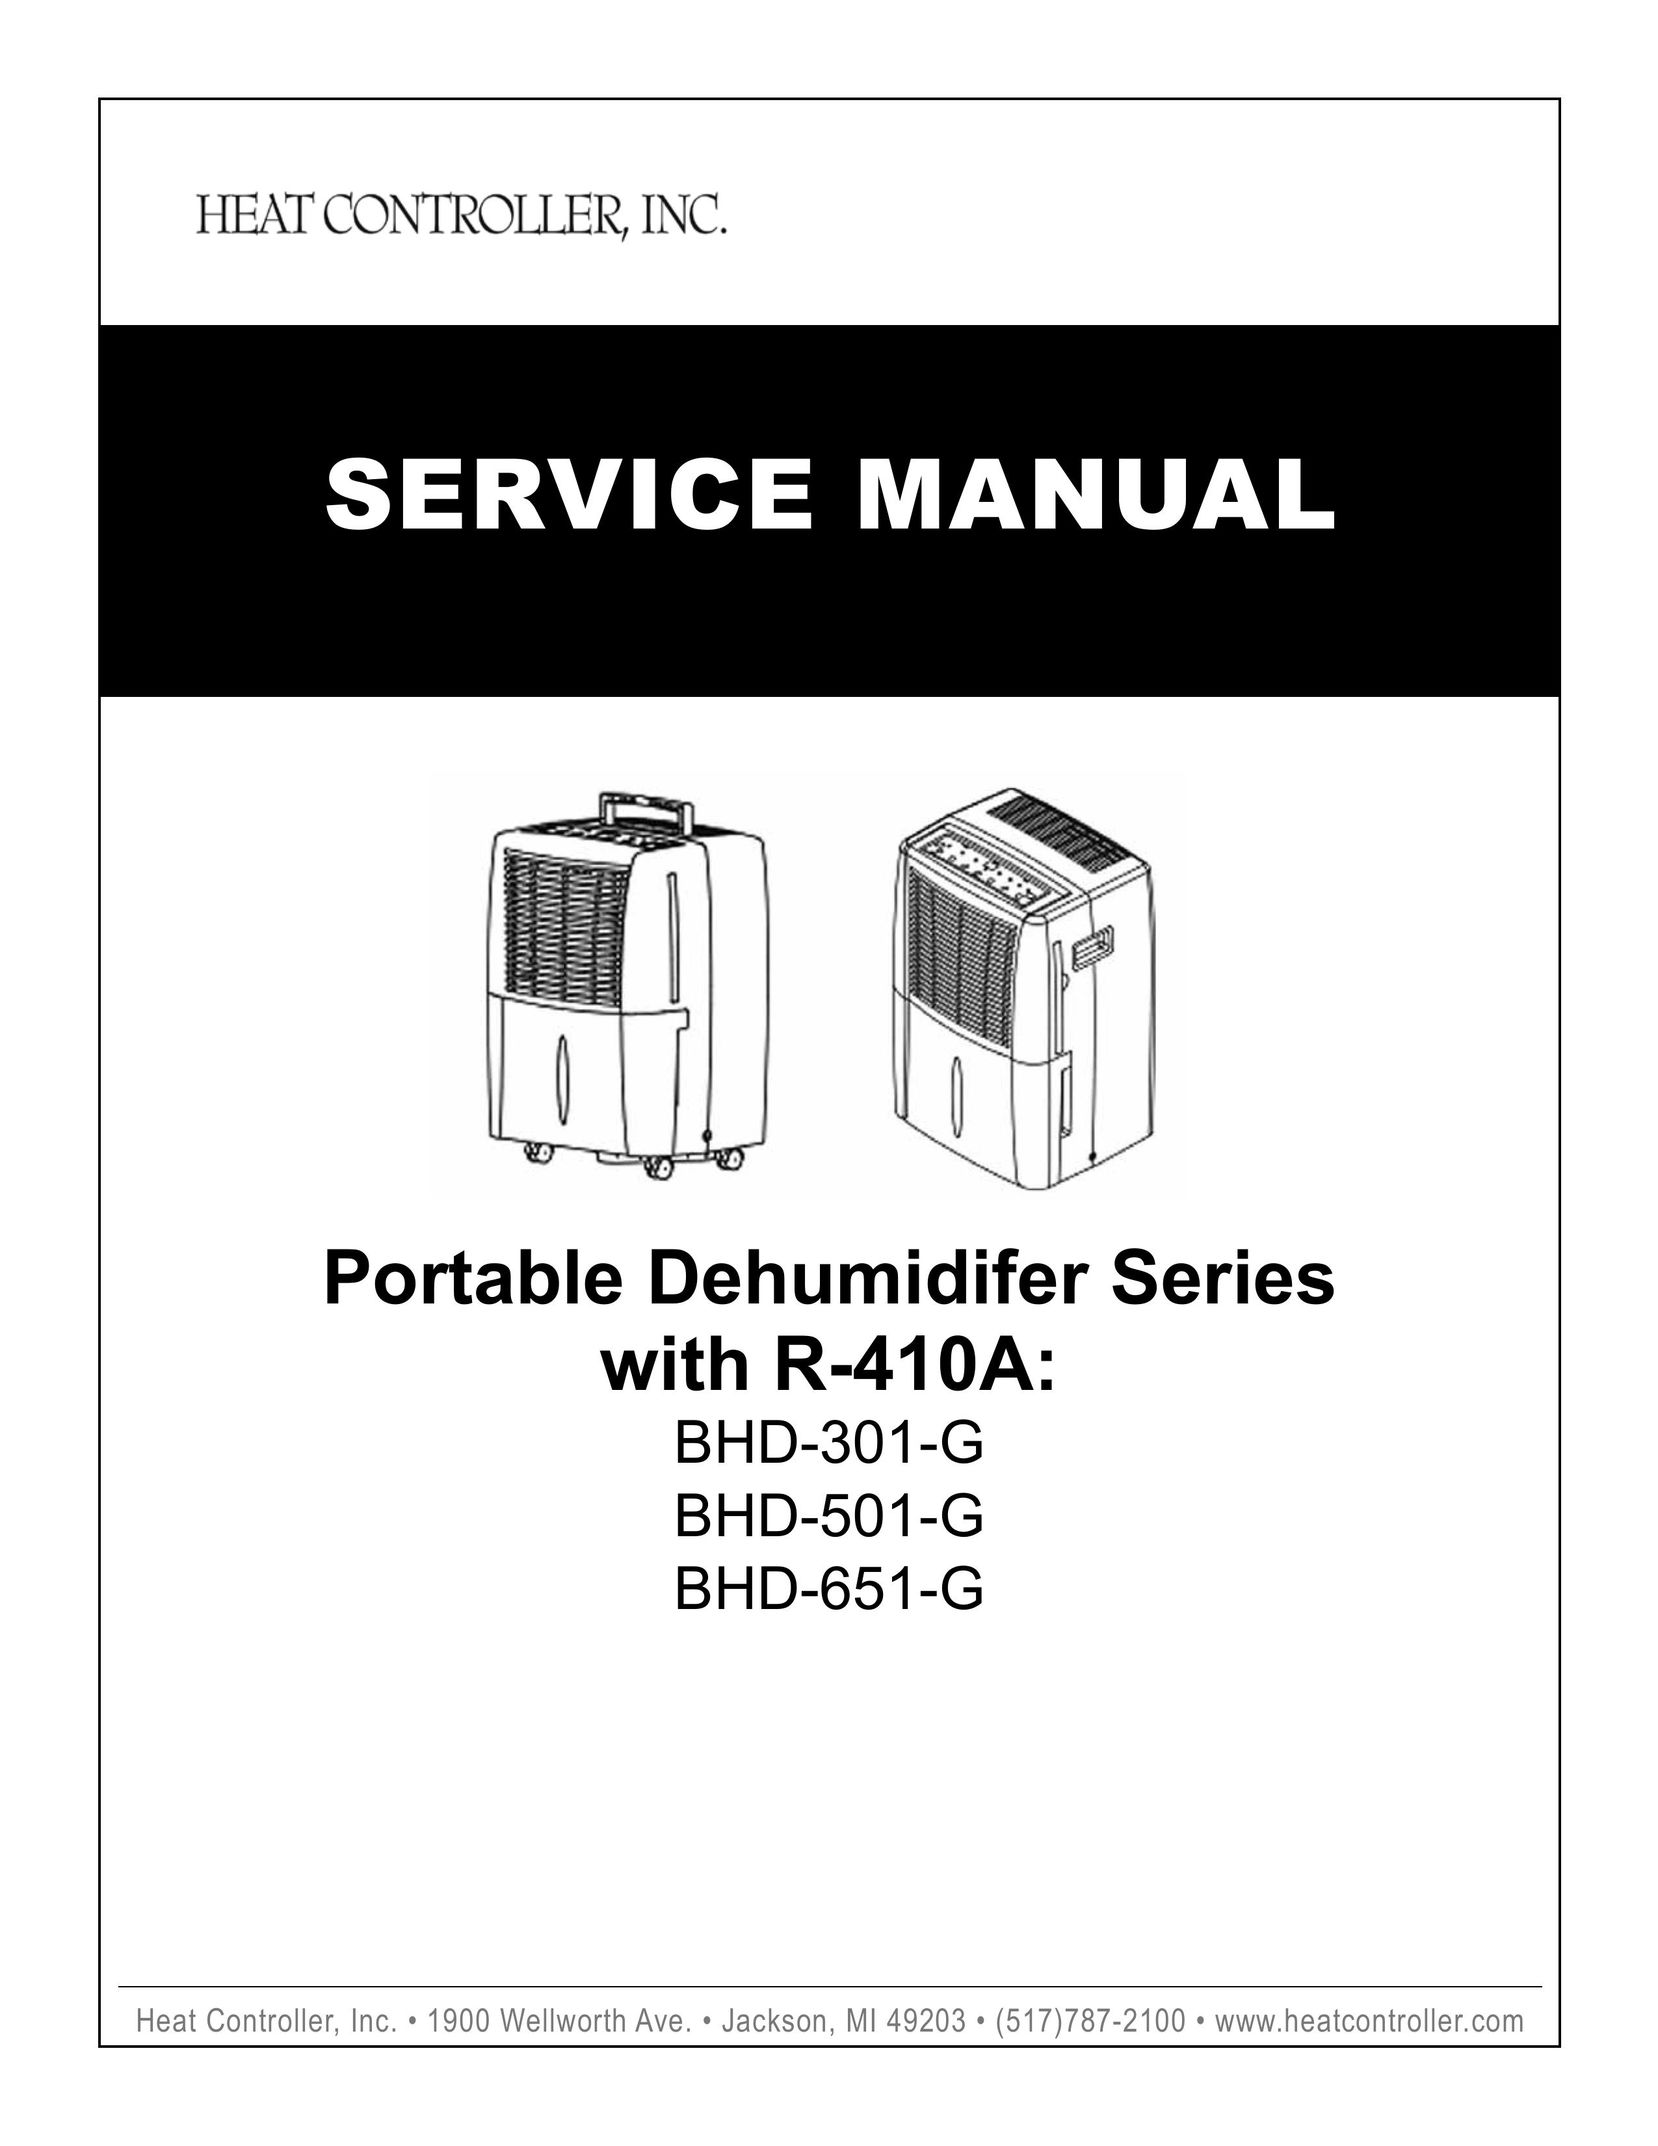 Heat Controller BHD-301-G Dehumidifier User Manual